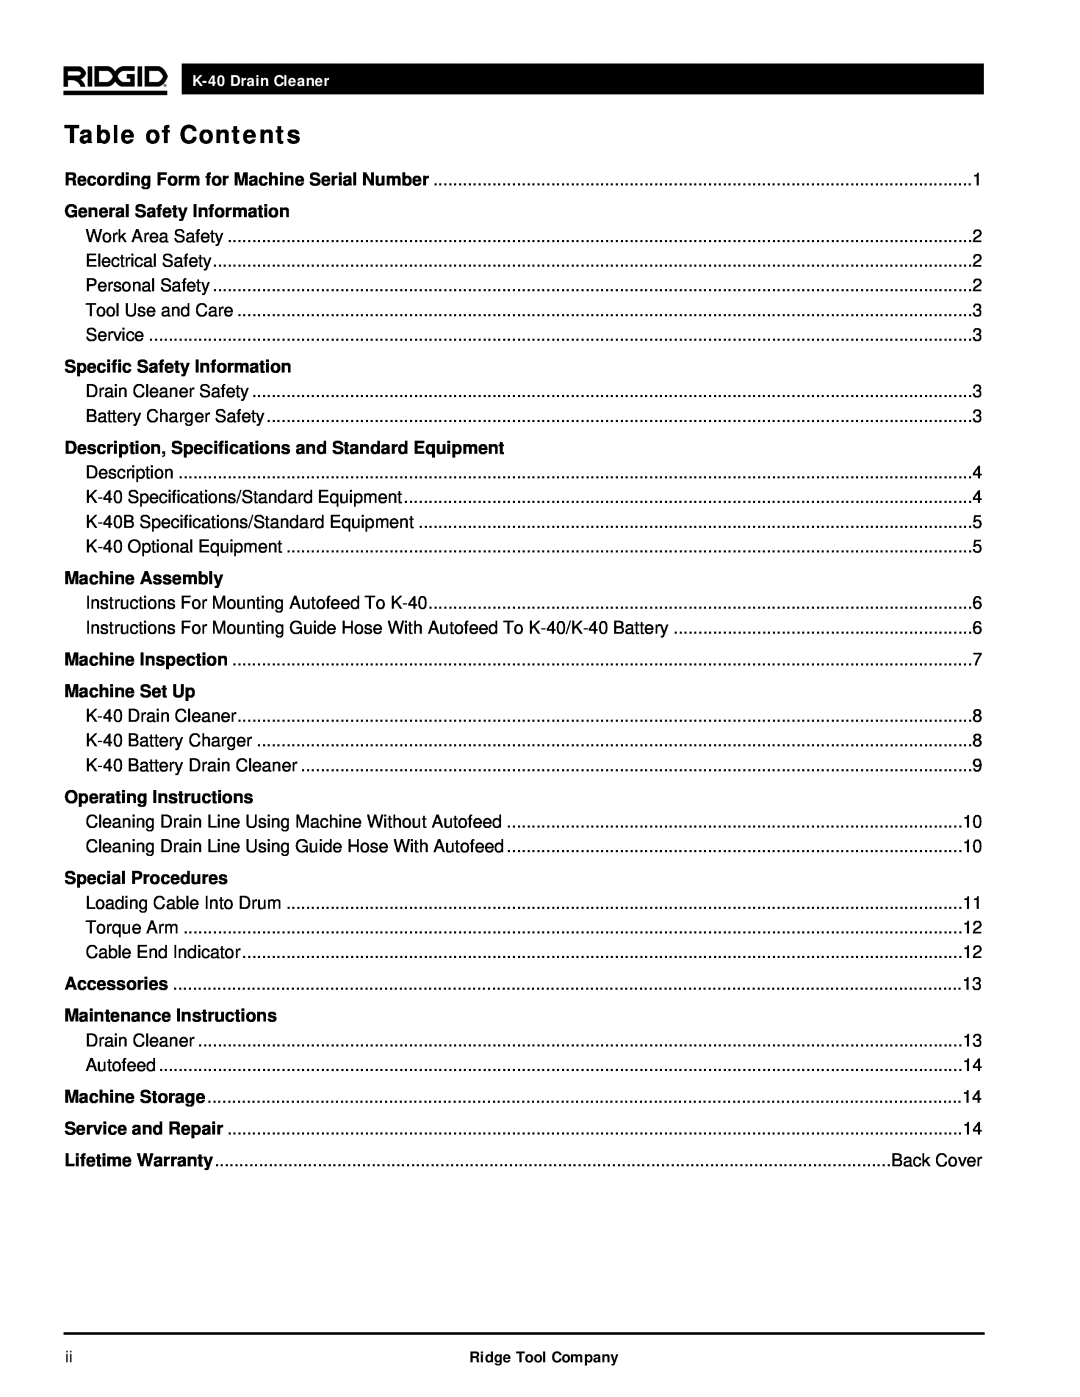 RIDGID K-40G PF, K-40B manual Table of Contents, K-40Drain Cleaner 